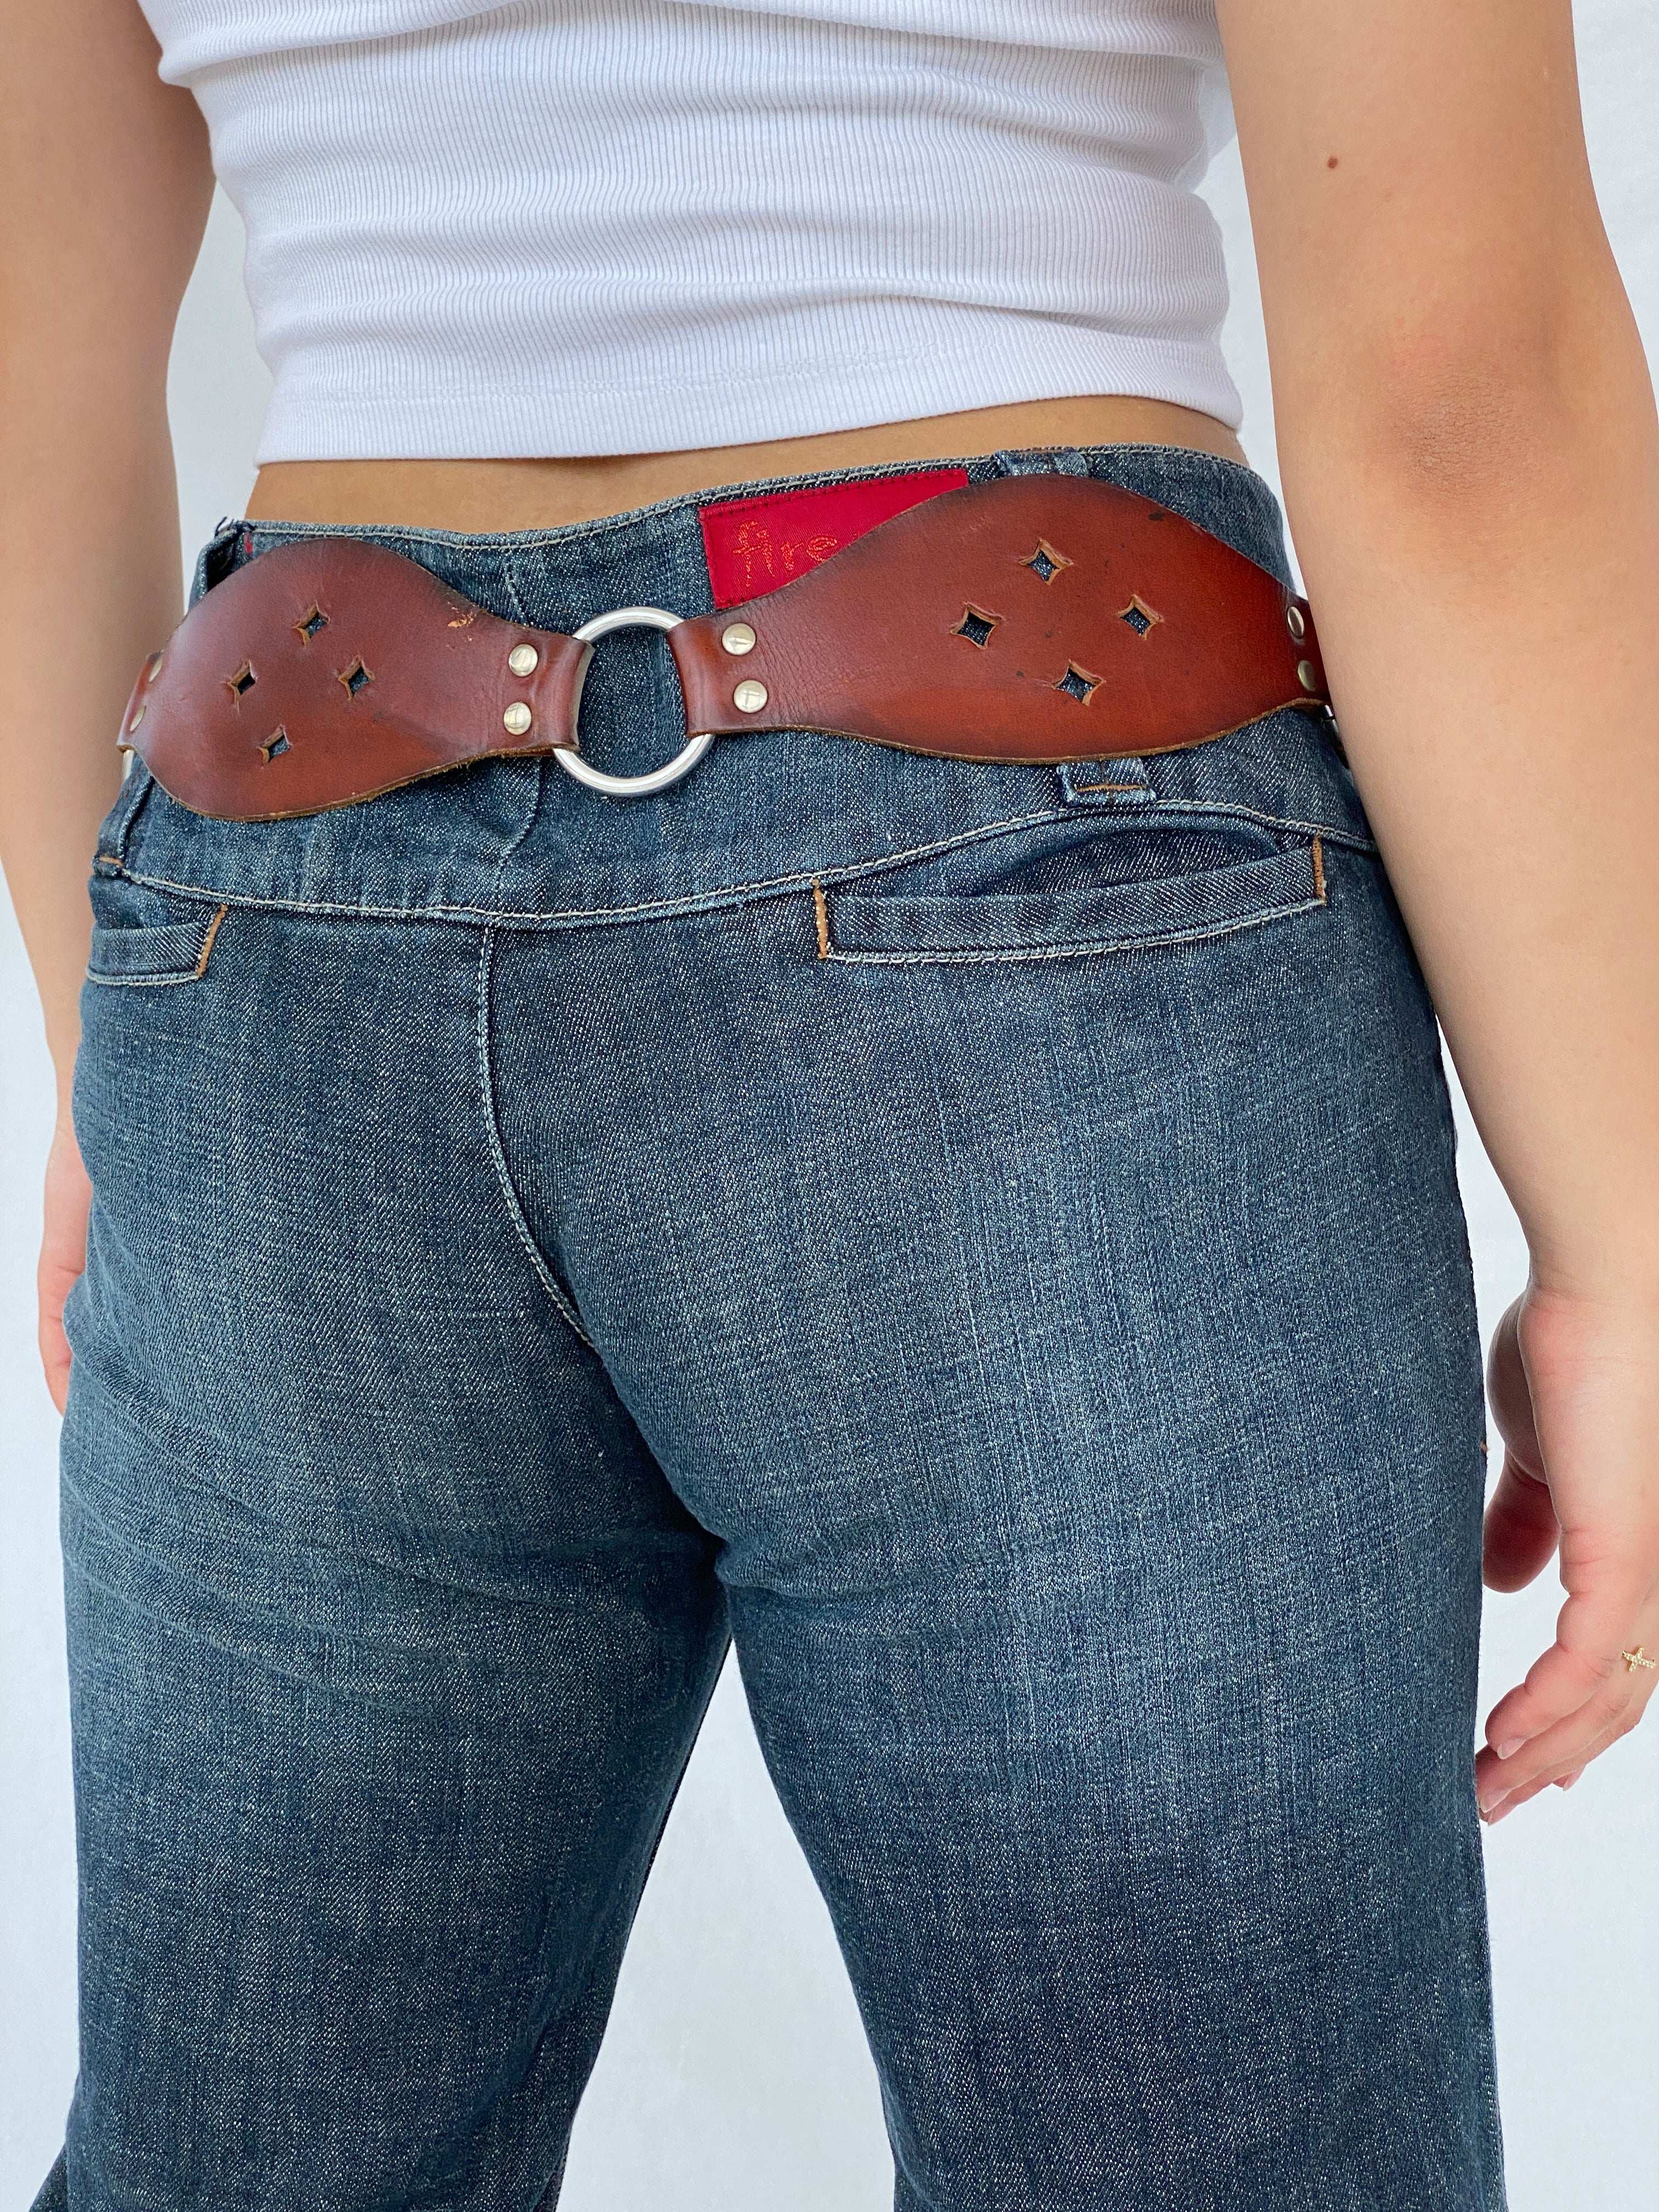 Vintage Western Cowboy Style Belt - Balagan Vintage Belt 90s, belt, cowboy, Lana, NEW IN